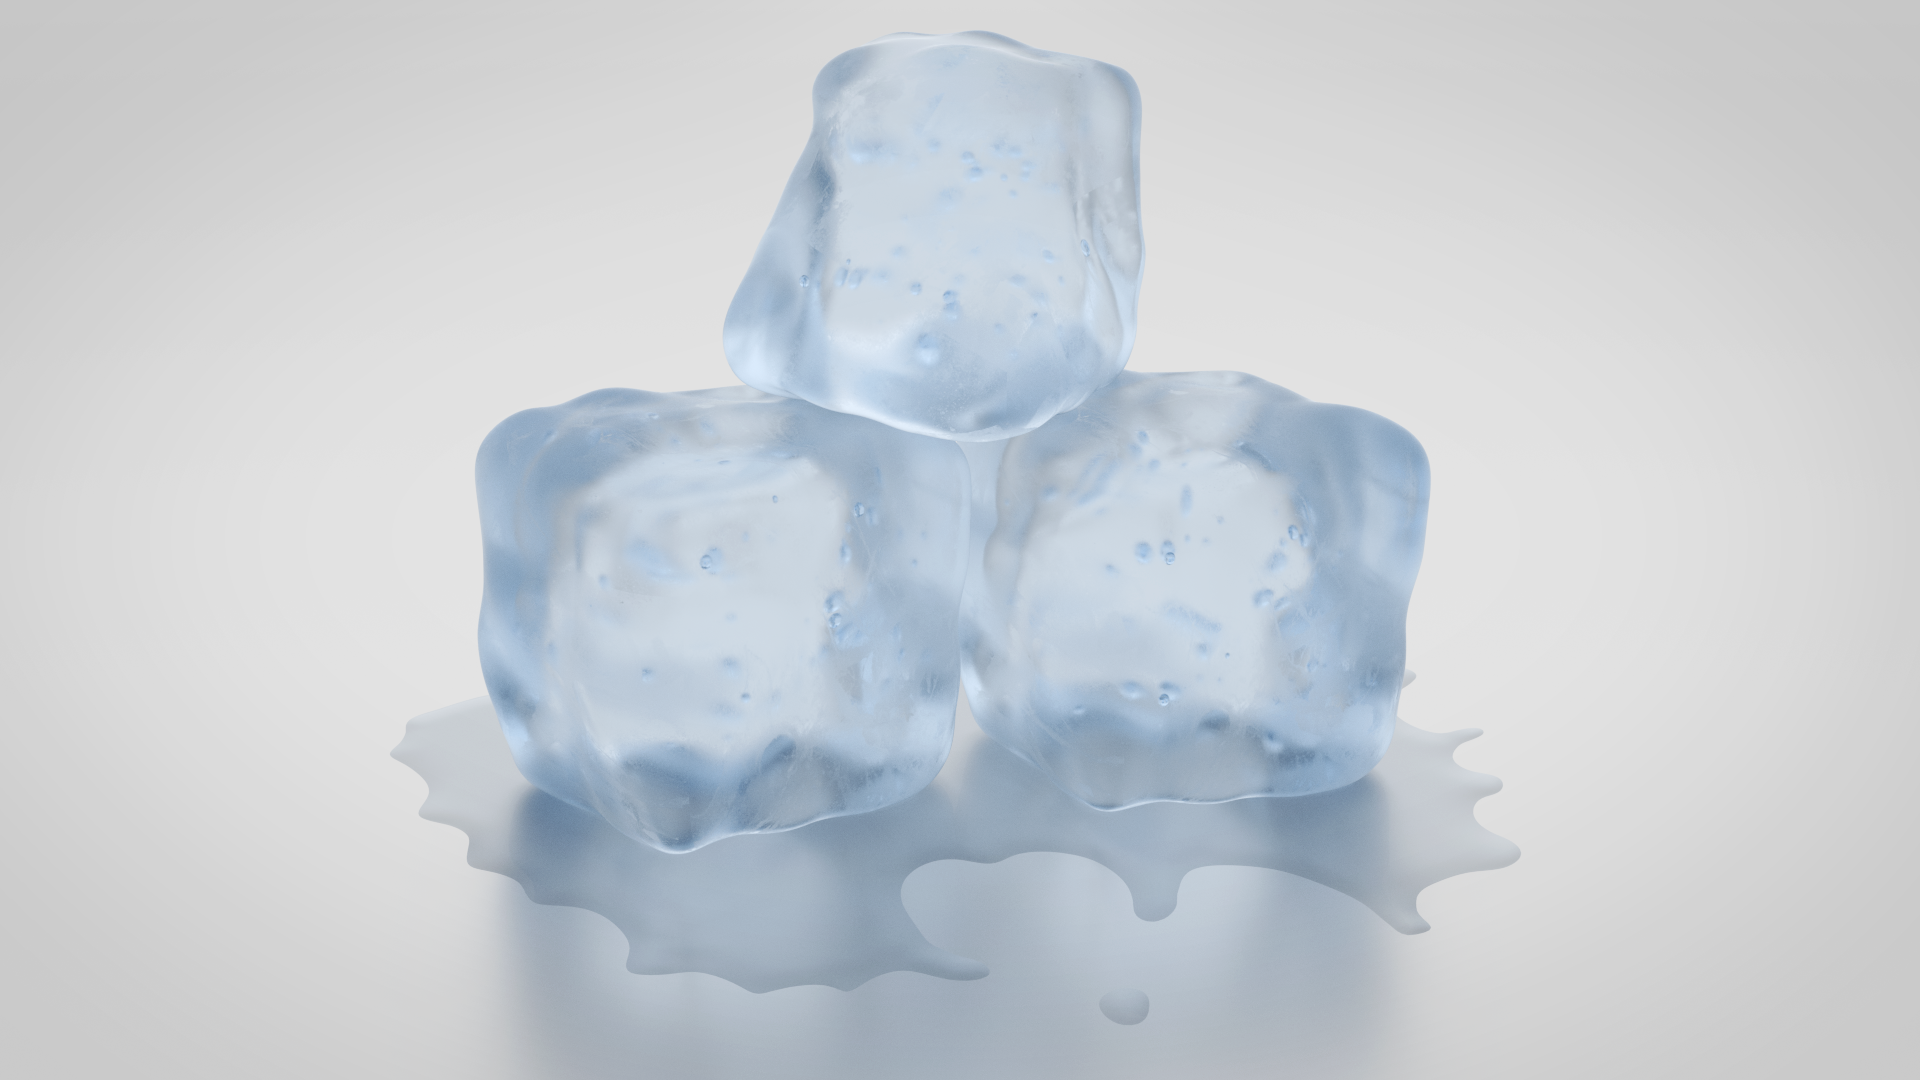 Кубик льда имеющий температуру 0. Кубики льда. Кусочки льда. Холодный кубик льда. Ледяной кубик.